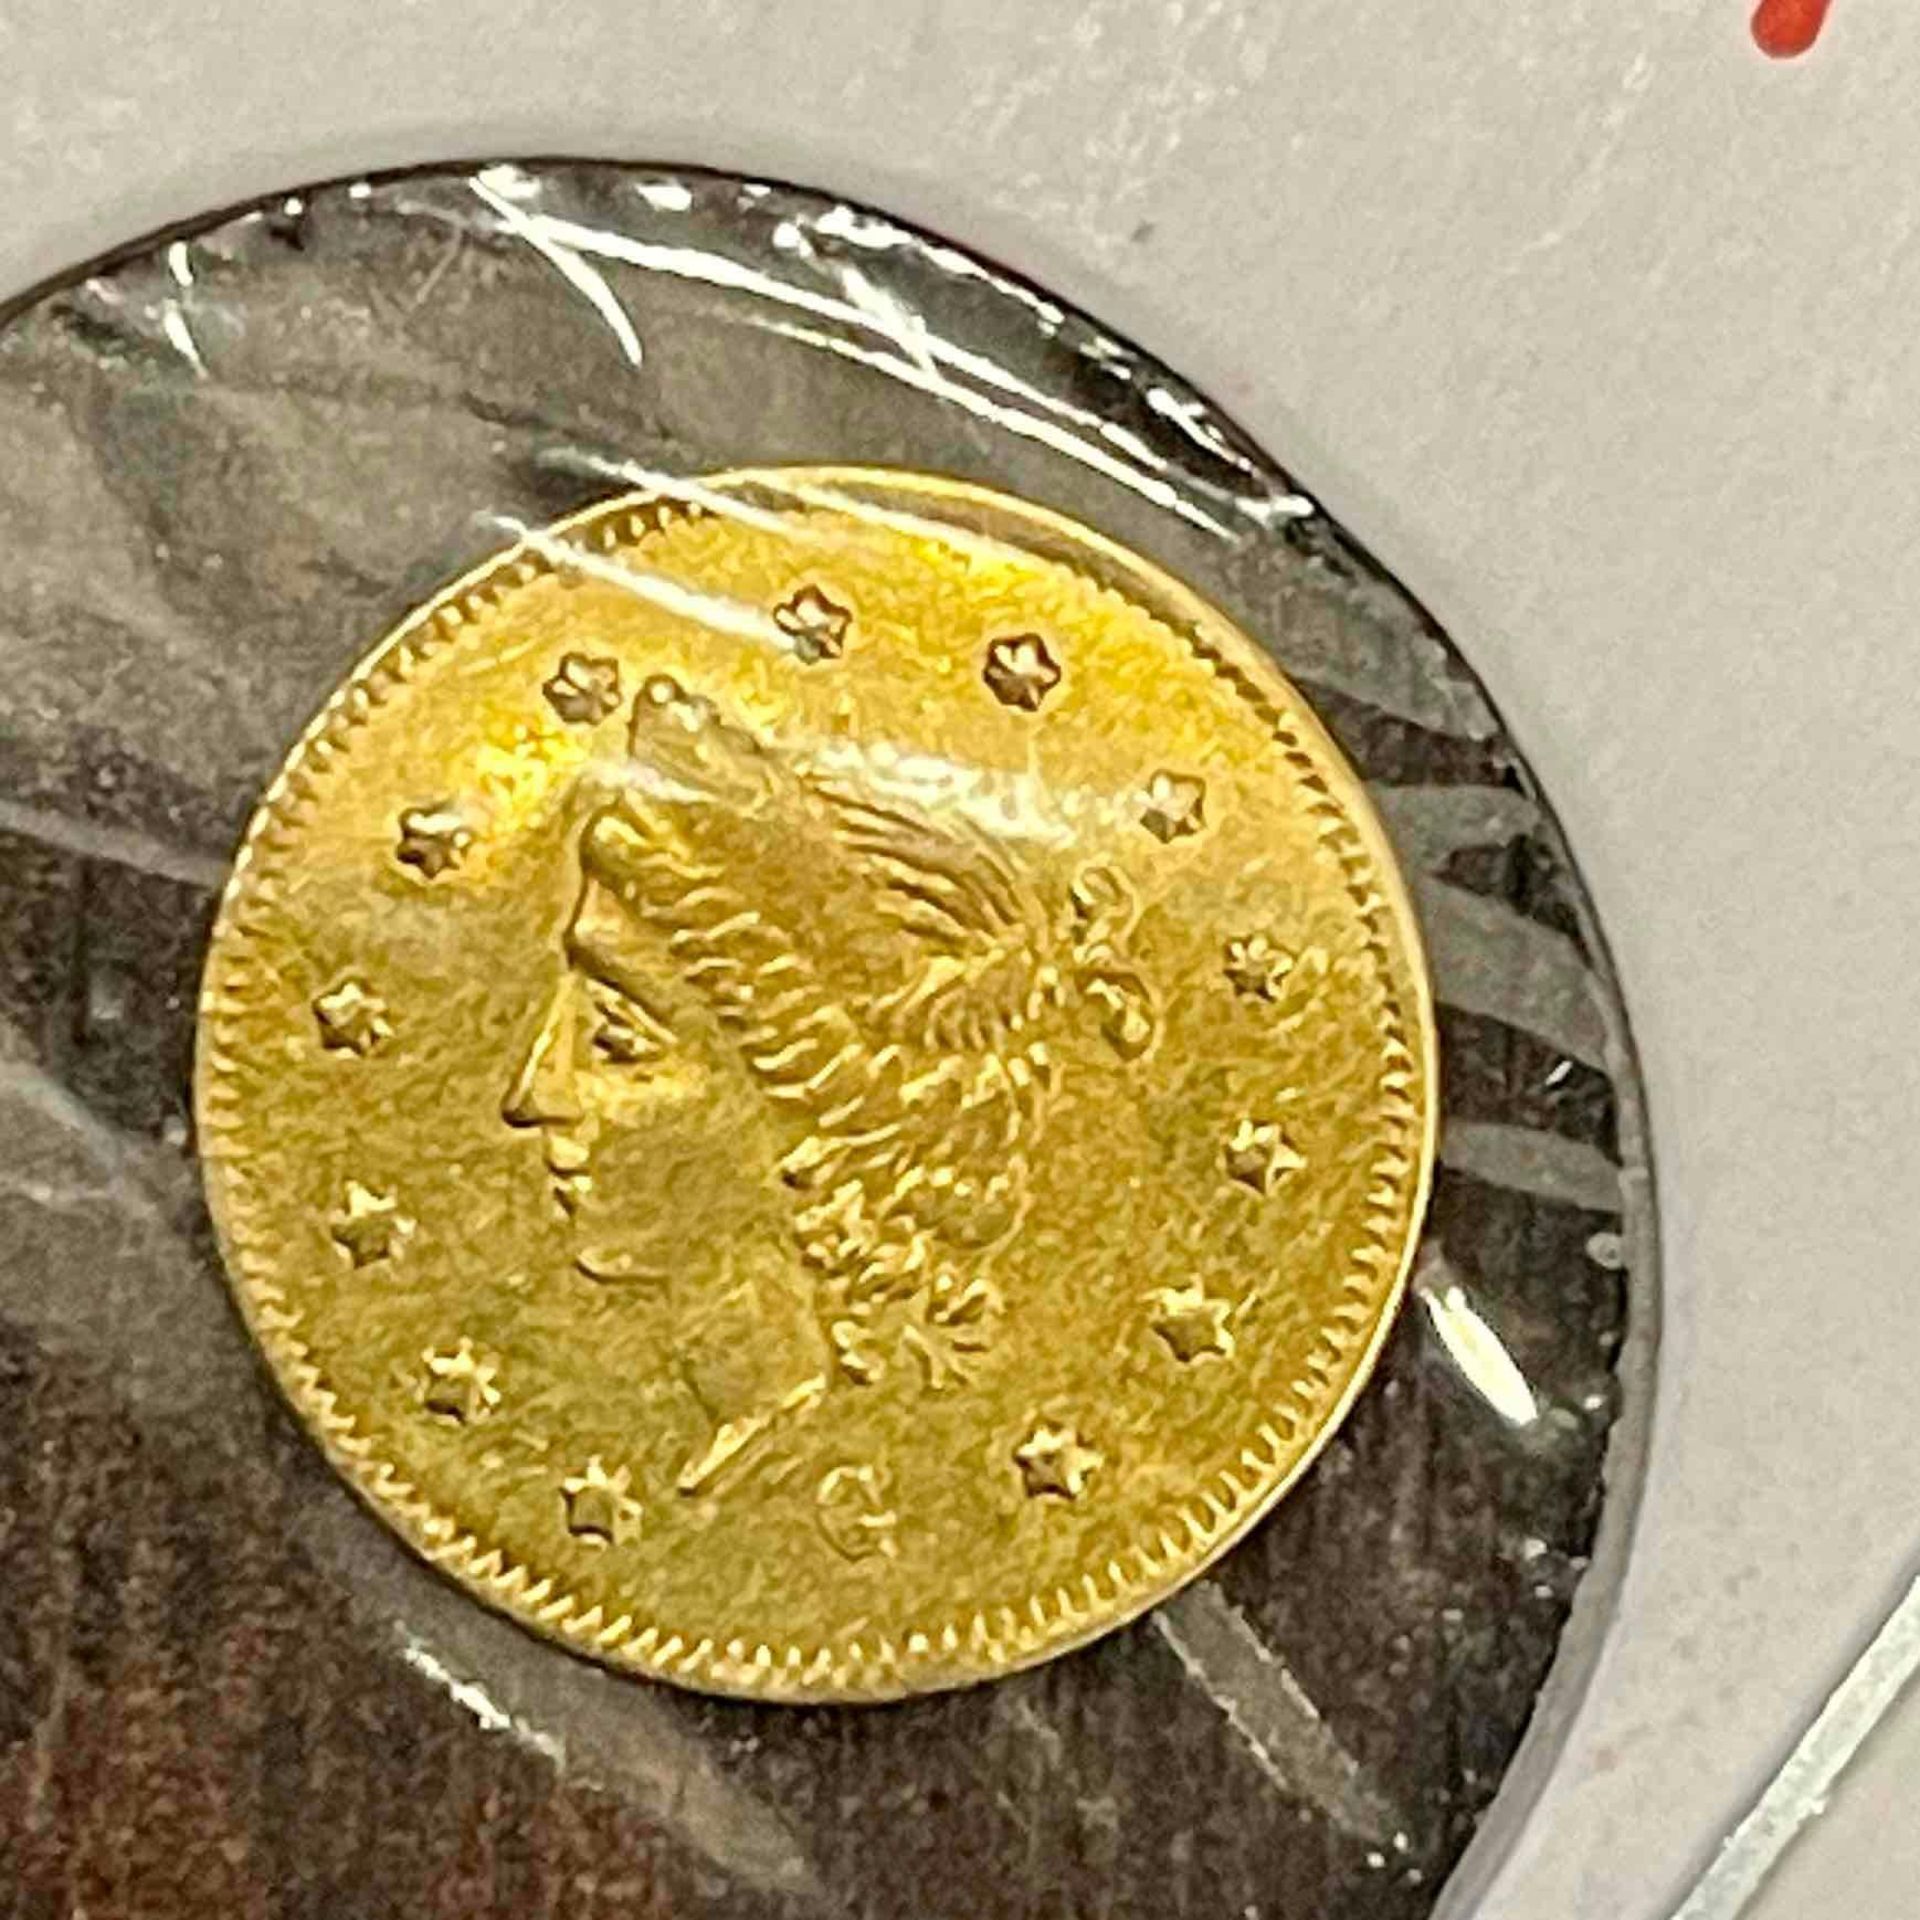 1867 California Gold 1/2 Dollar (50C) Coin - Image 2 of 5